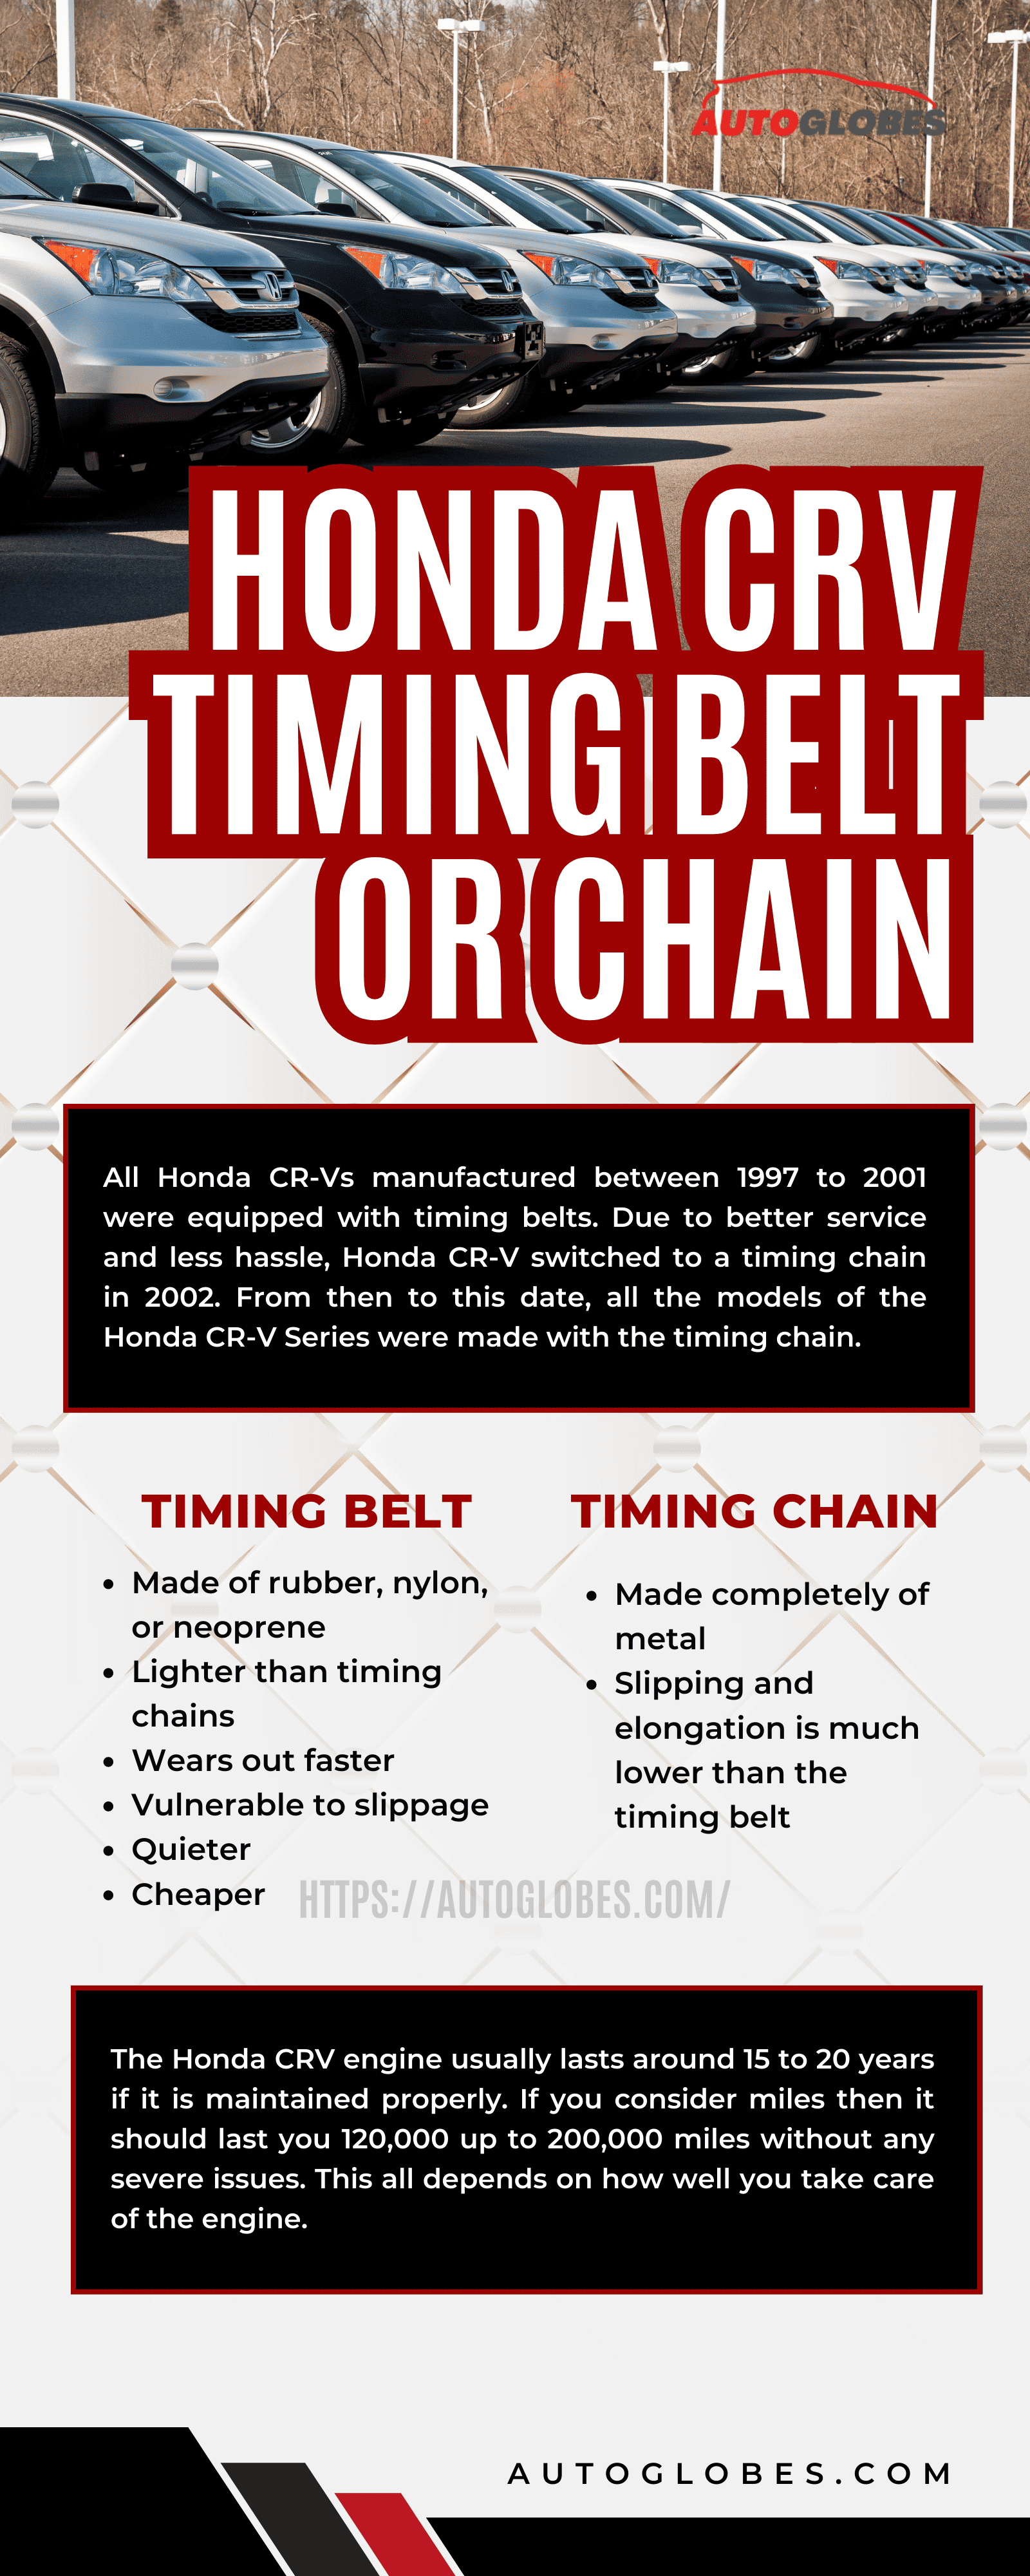 Honda CRV Timing Belt or Chain Infographic